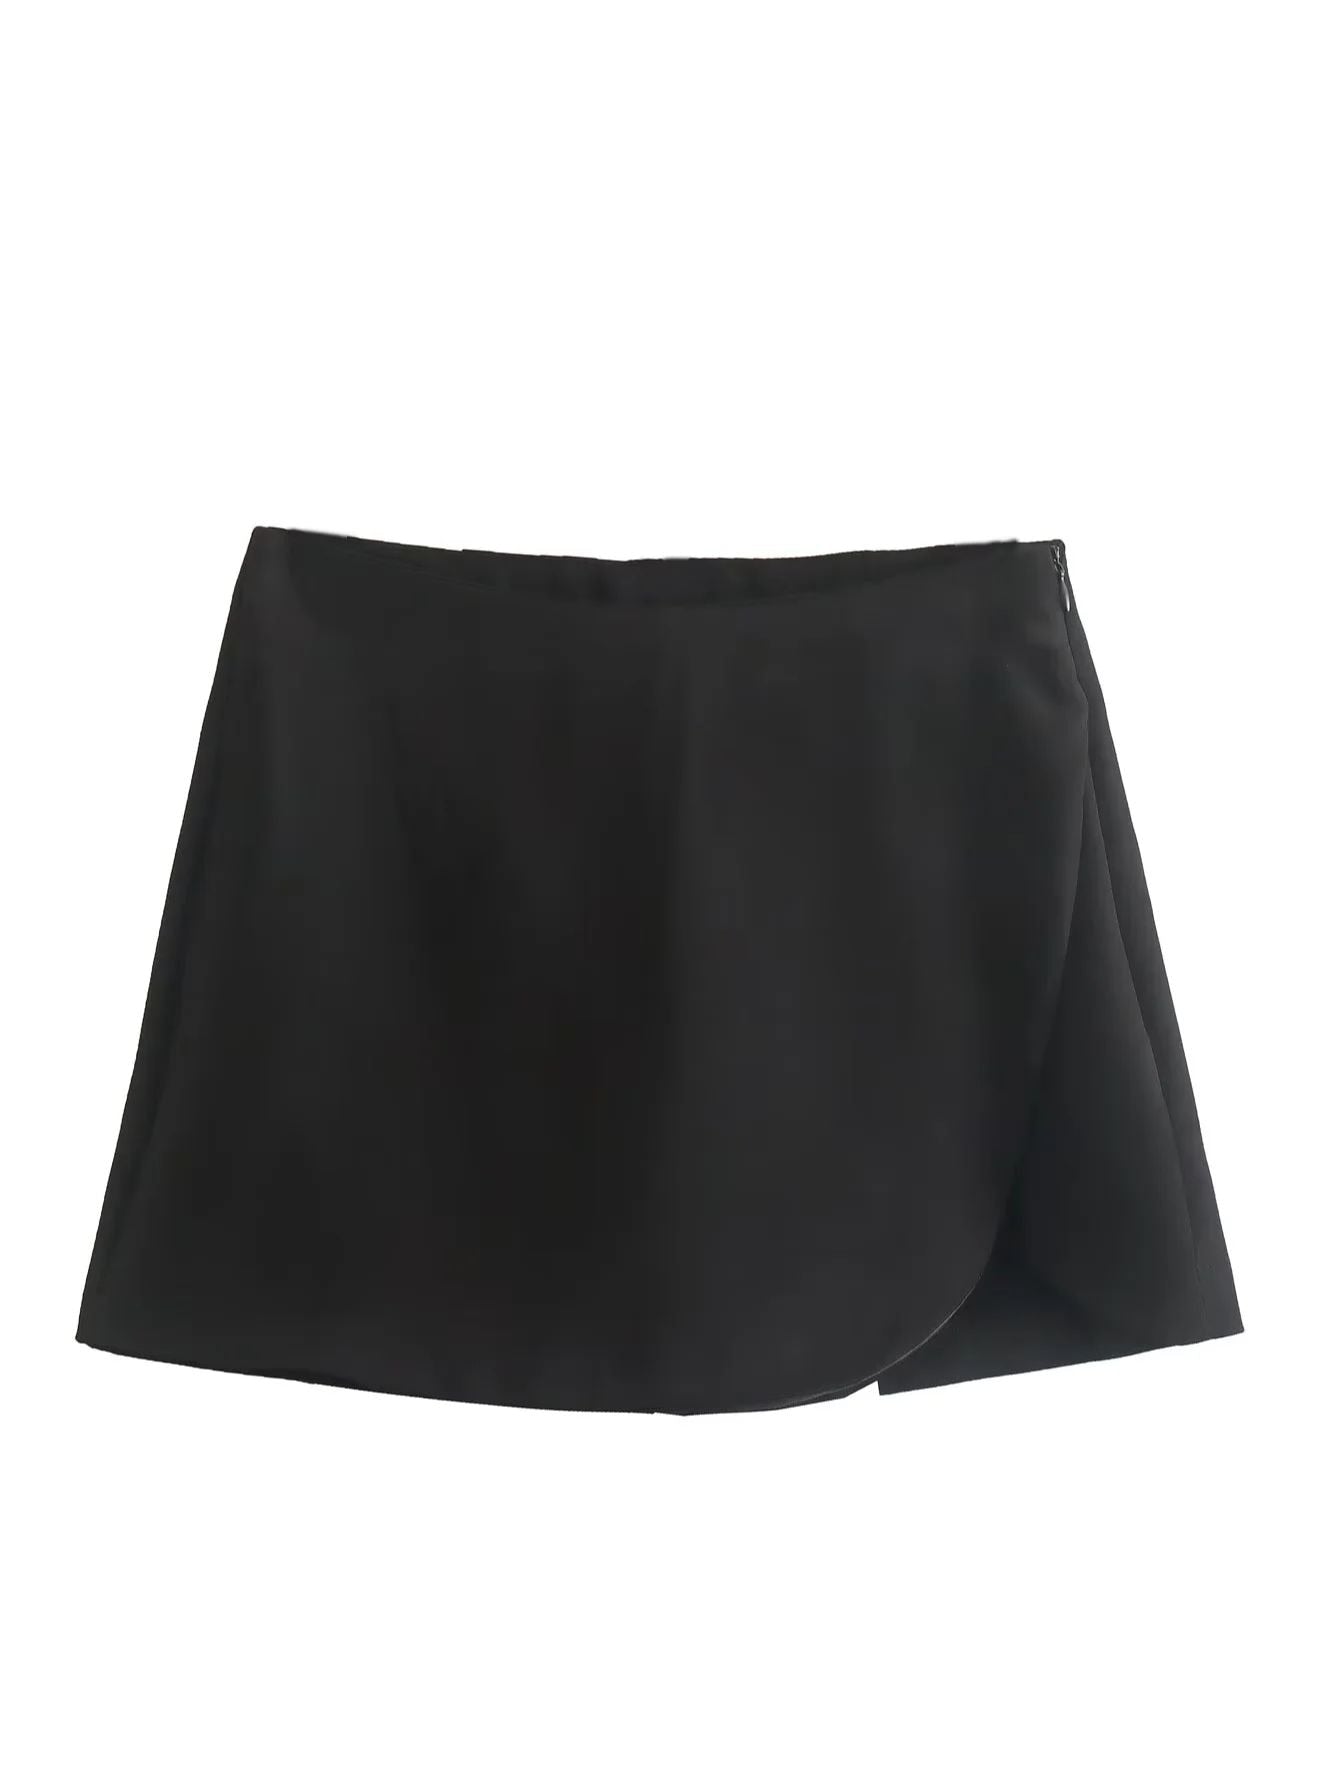 Asymmetrical Skirt With Shorts "Skort"